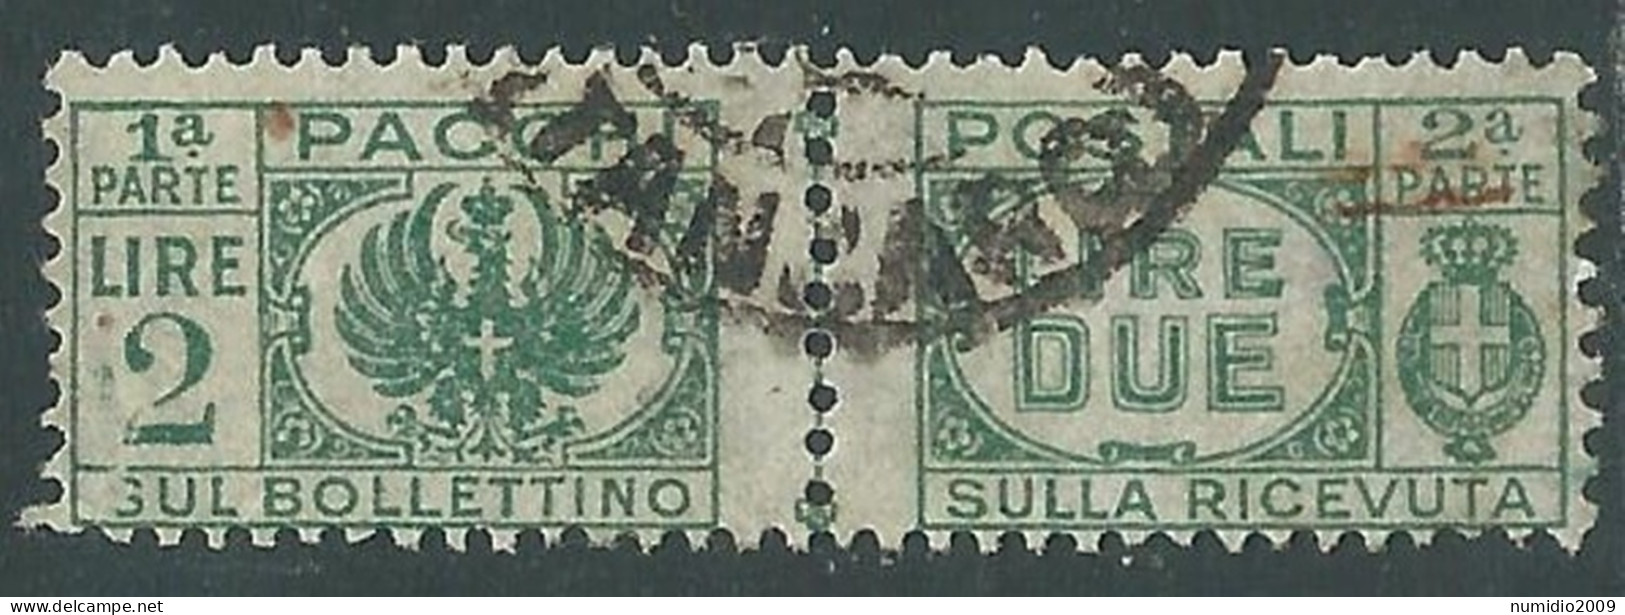 1946 LUOGOTENENZA PACCHI POSTALI USATO 2 LIRE - I18-9 - Paketmarken